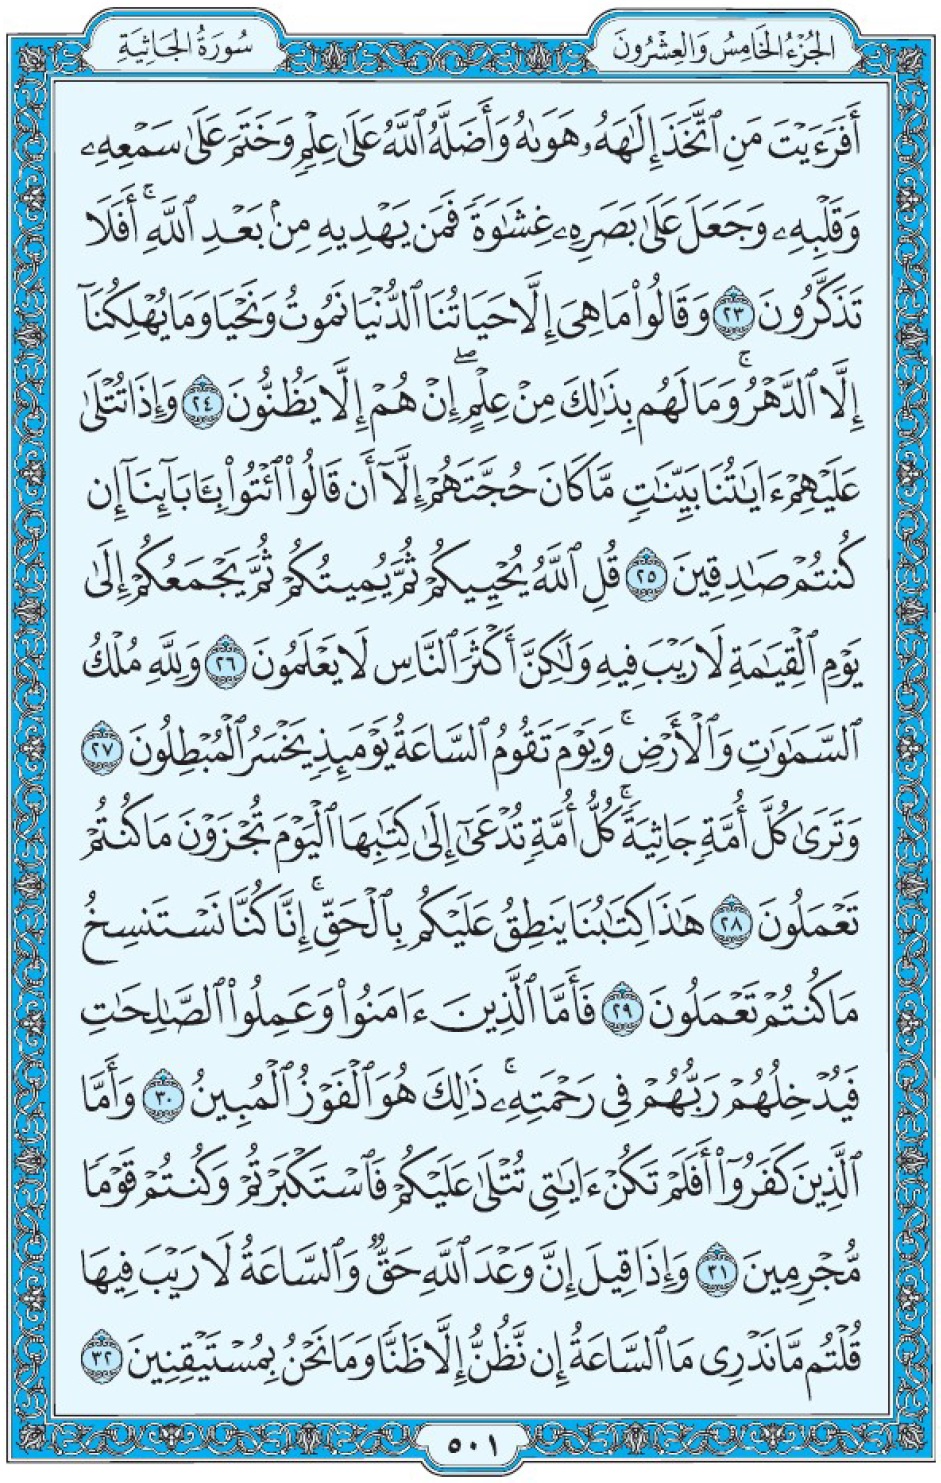 Коран Мединский мусхаф страница 501, Аль-Джясия, аят 23-32